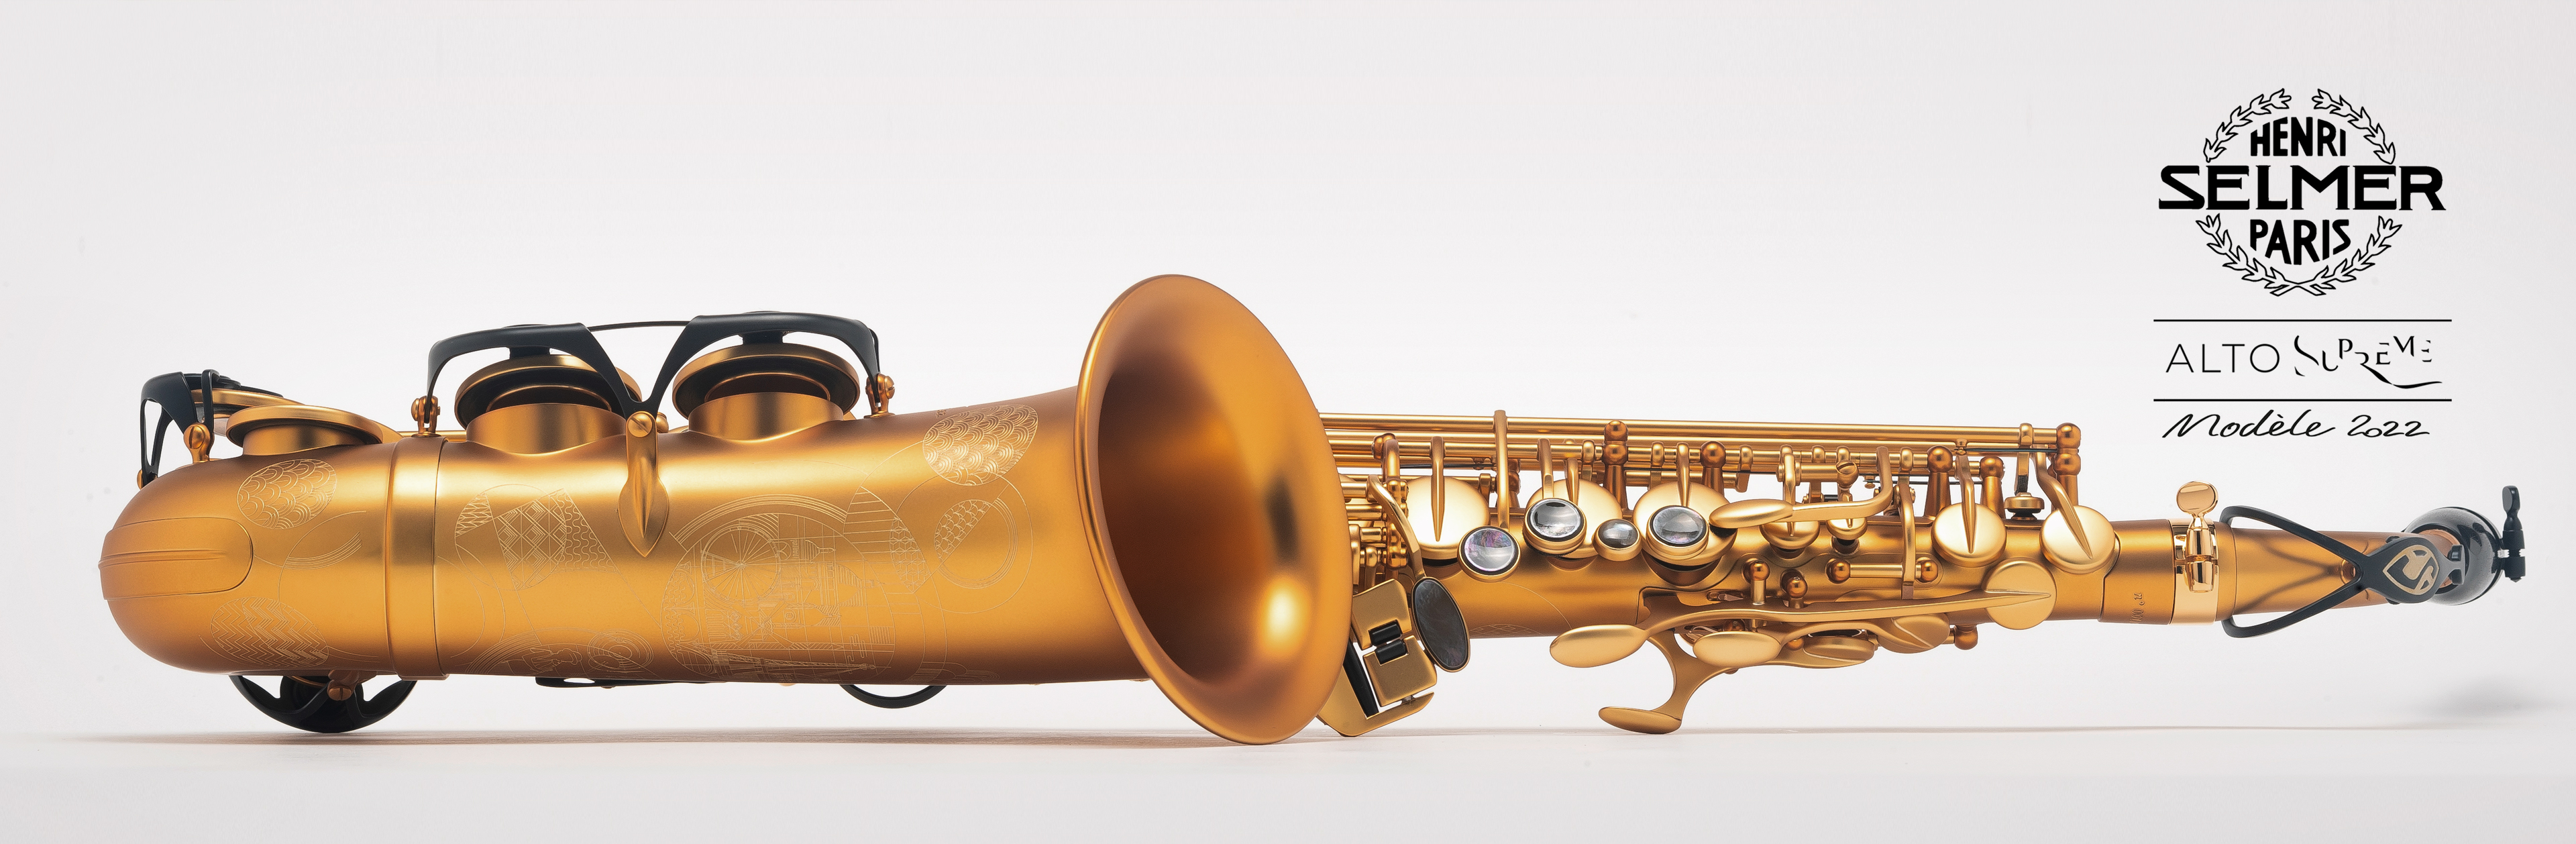 Selmer-Supreme-Alt-Saxophon-Limited-Edition-Modell-2022